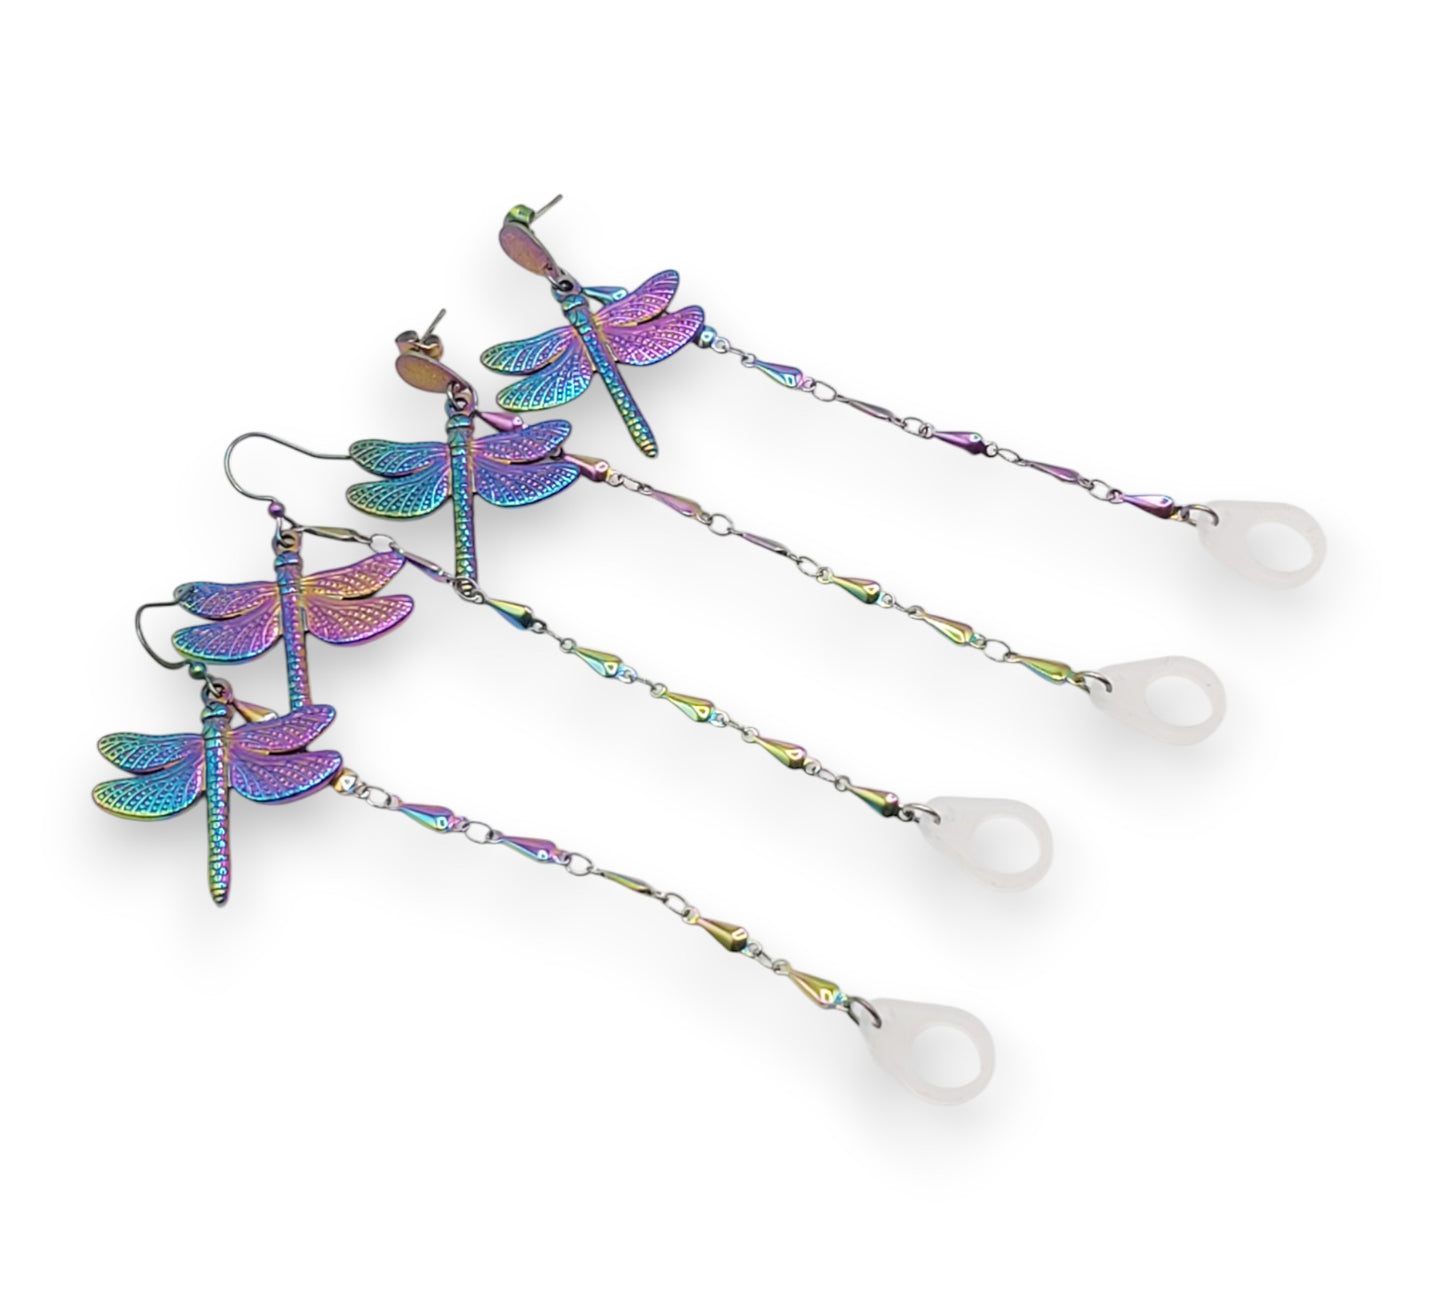 Regenbogen-Libellen-Ohrringe für Hörgeräte